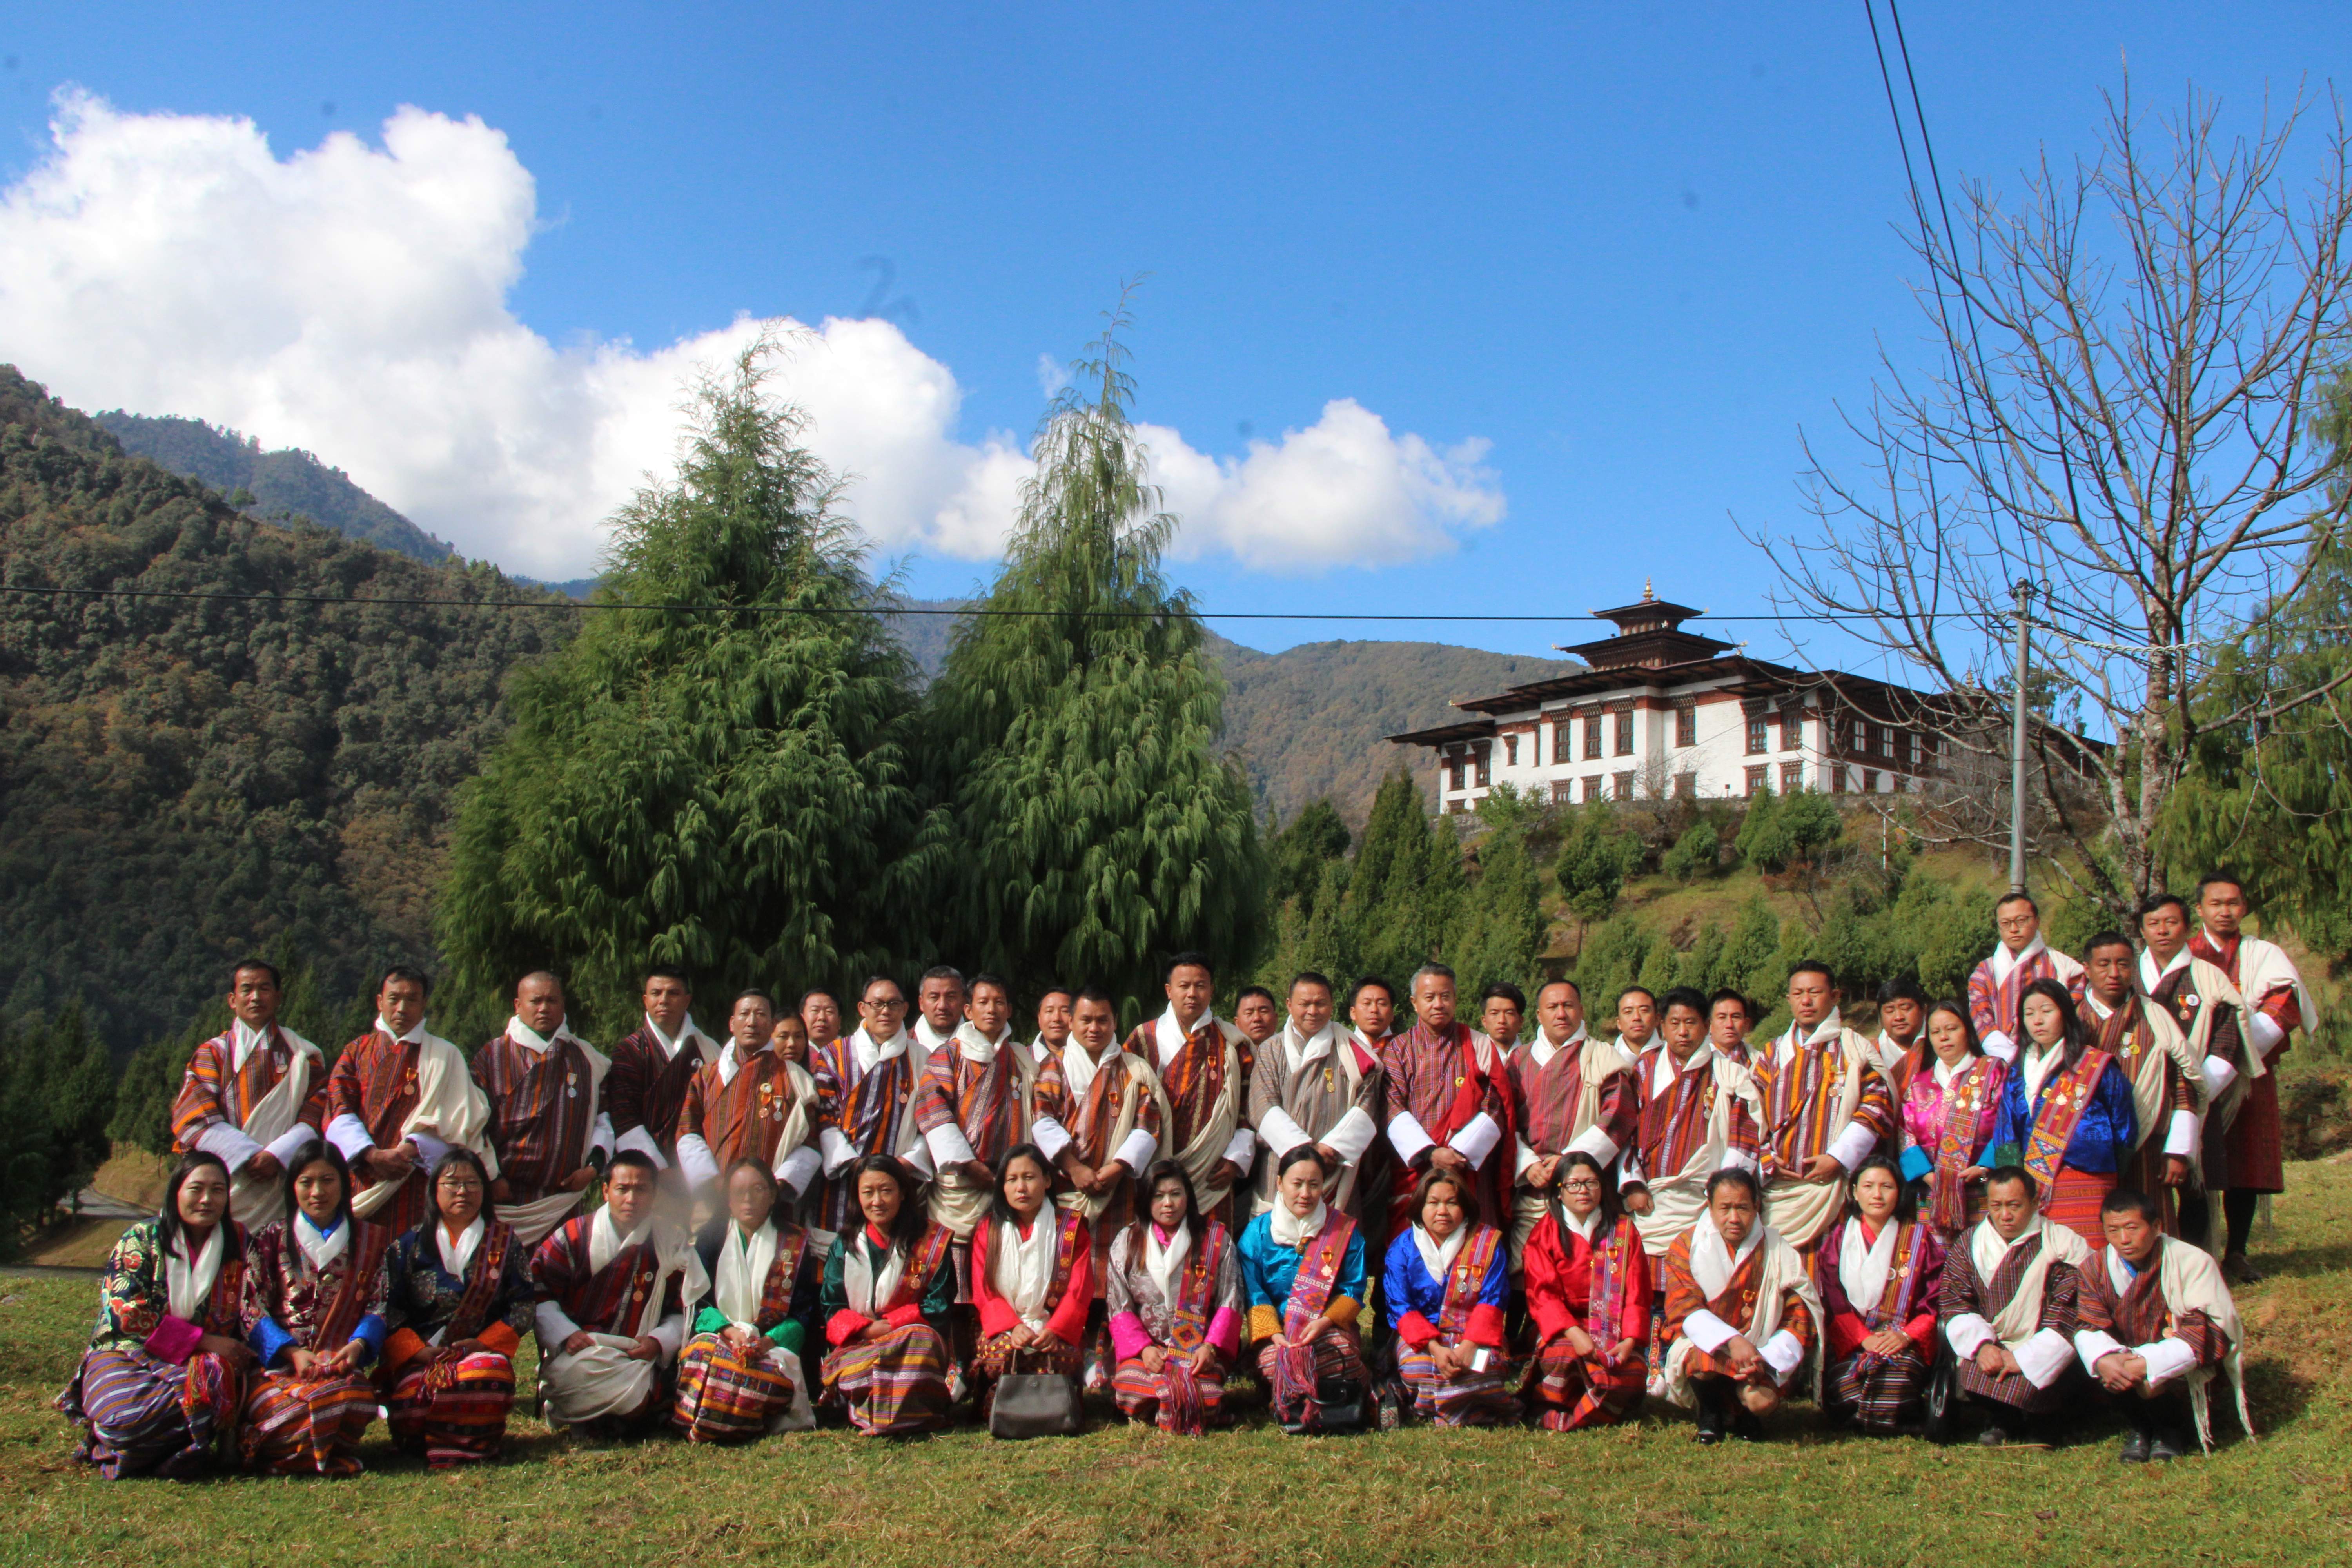 49 civil servants working under Trashi Yangtse Dzongkhag received the Royal Civil Service Awards